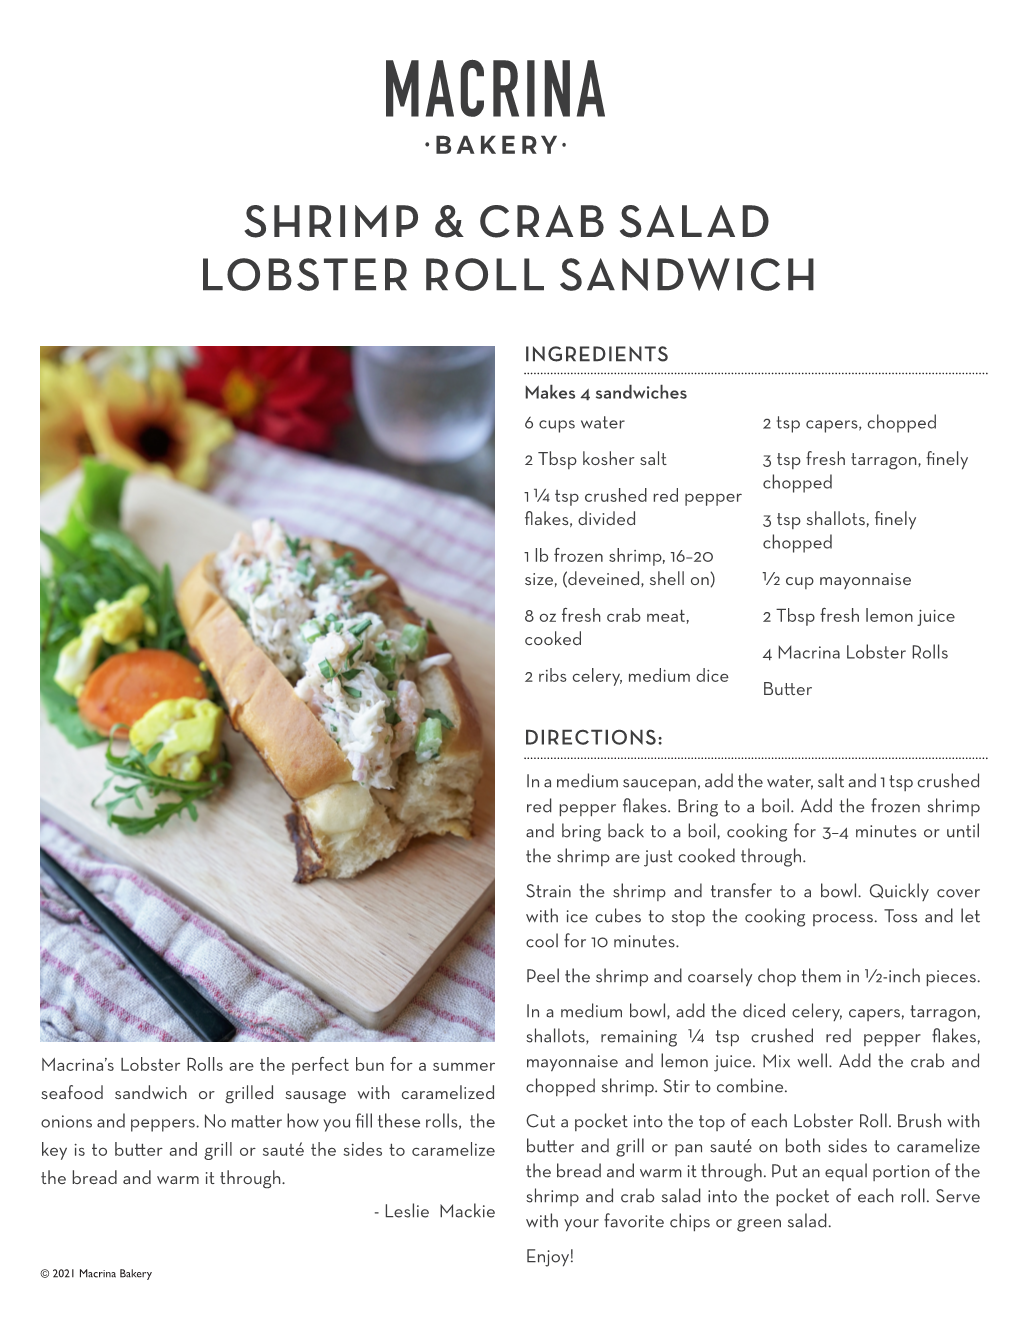 Shrimp & Crab Salad Lobster Roll Sandwich